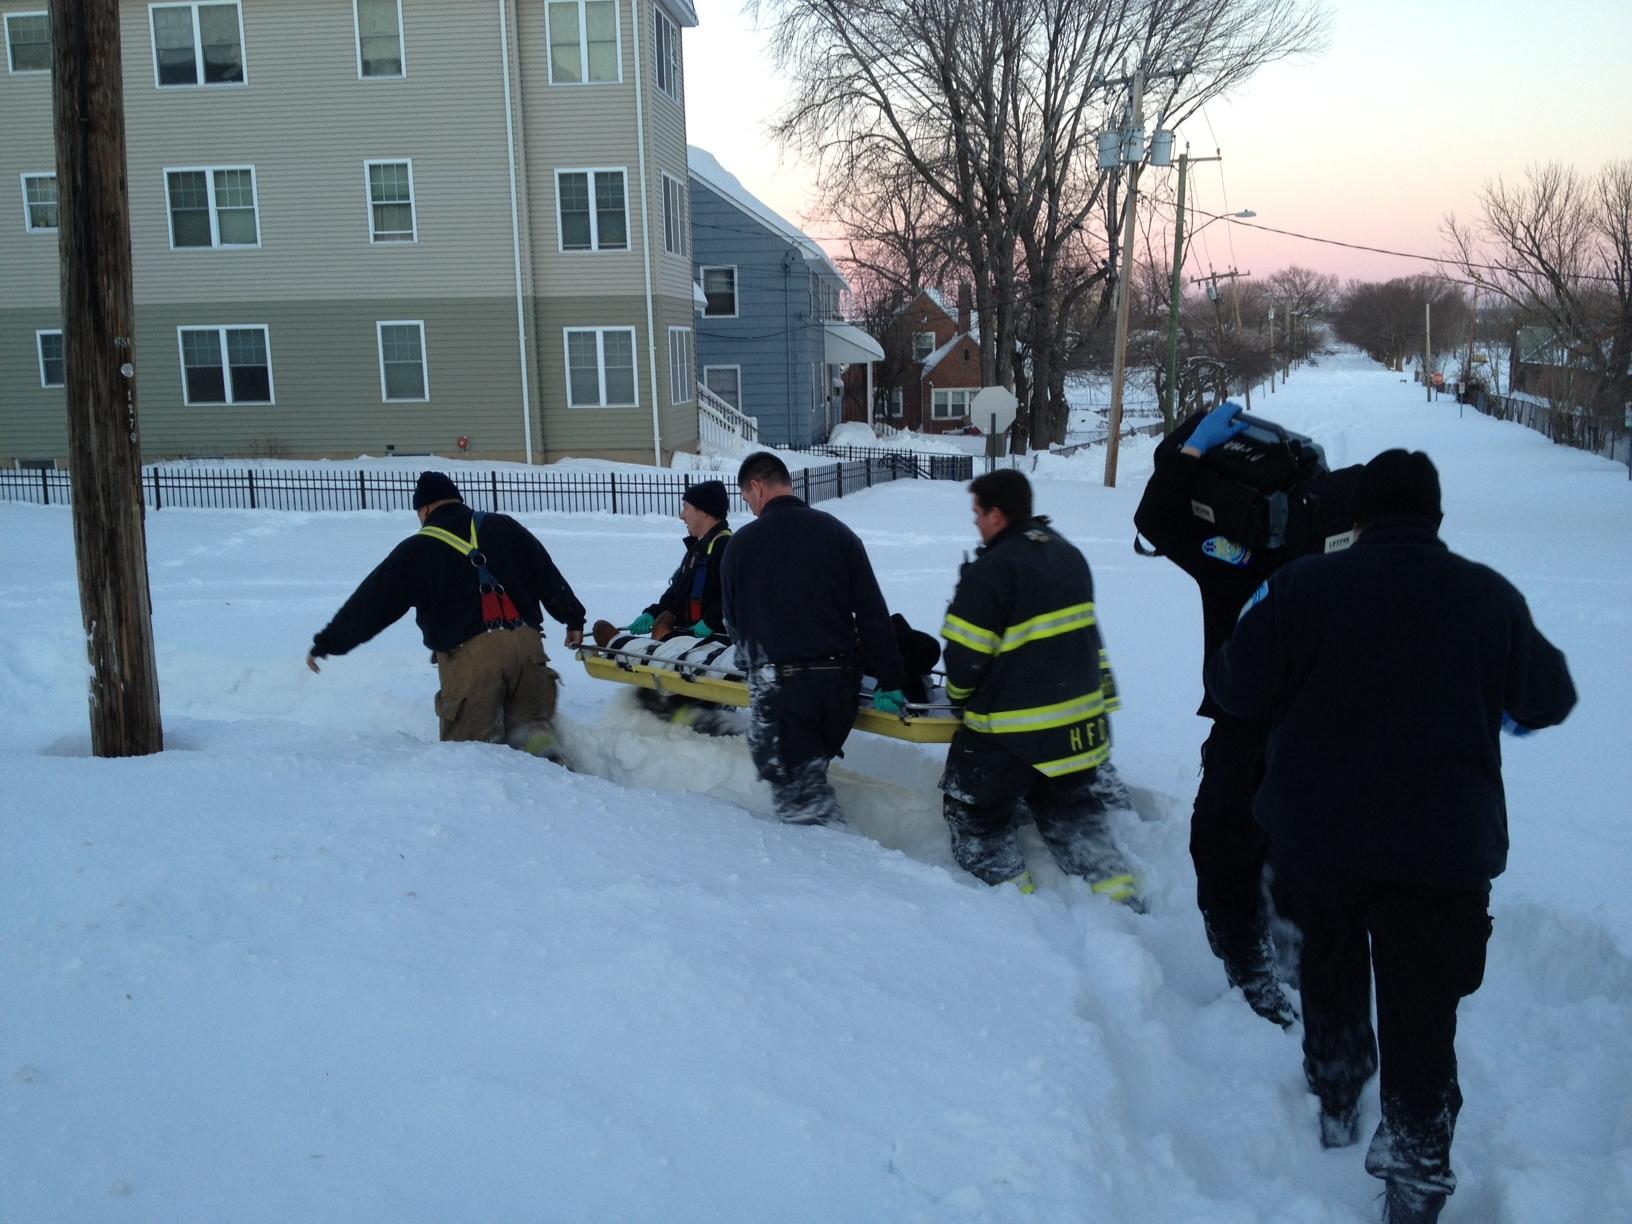 Blizzard Charlotte Hartford Fire Department Aetna Ambulance